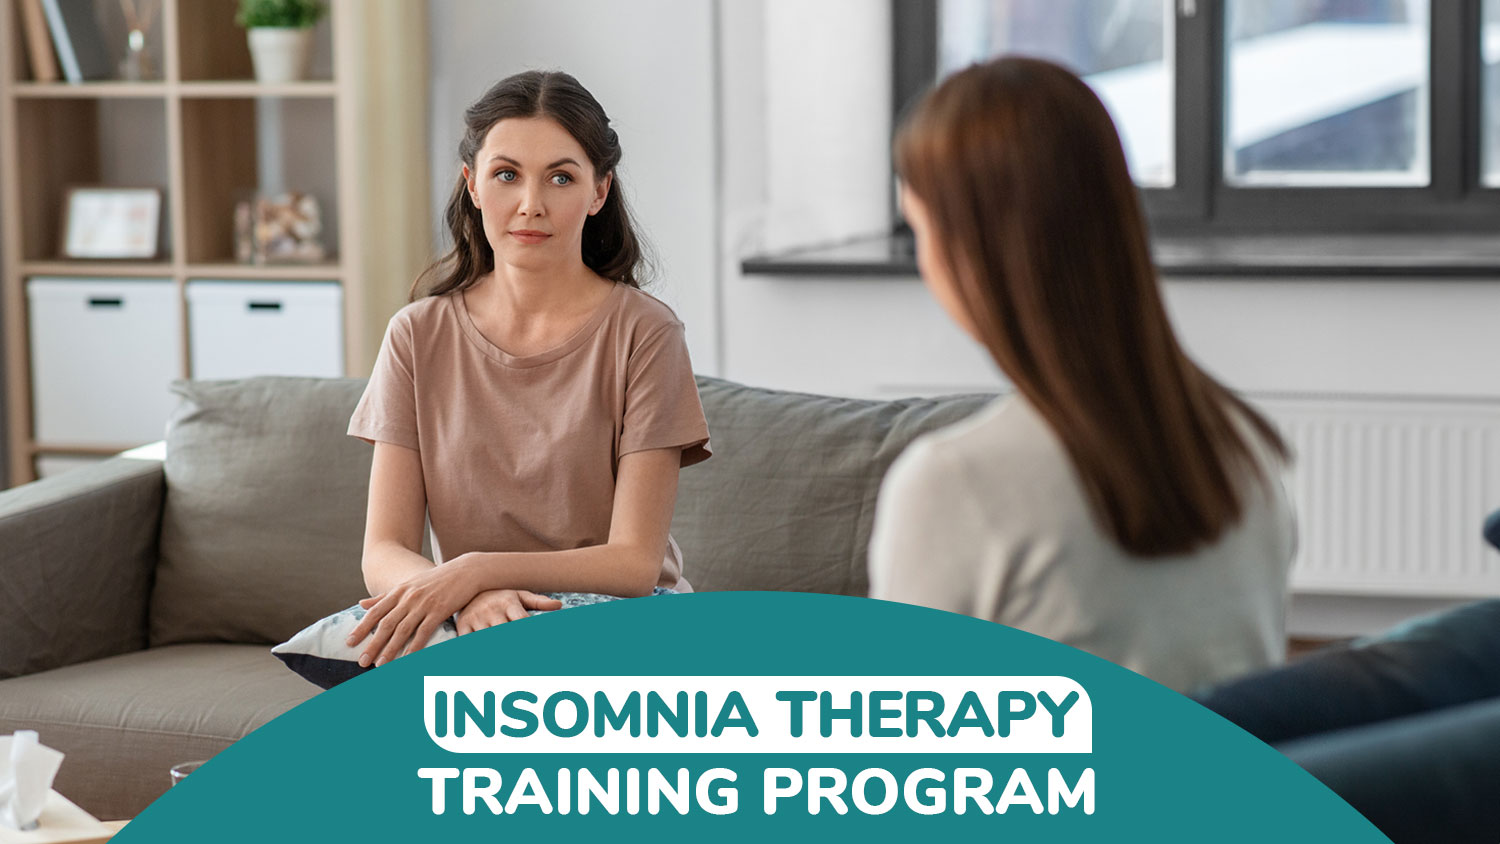 Insomnia therapy - training program